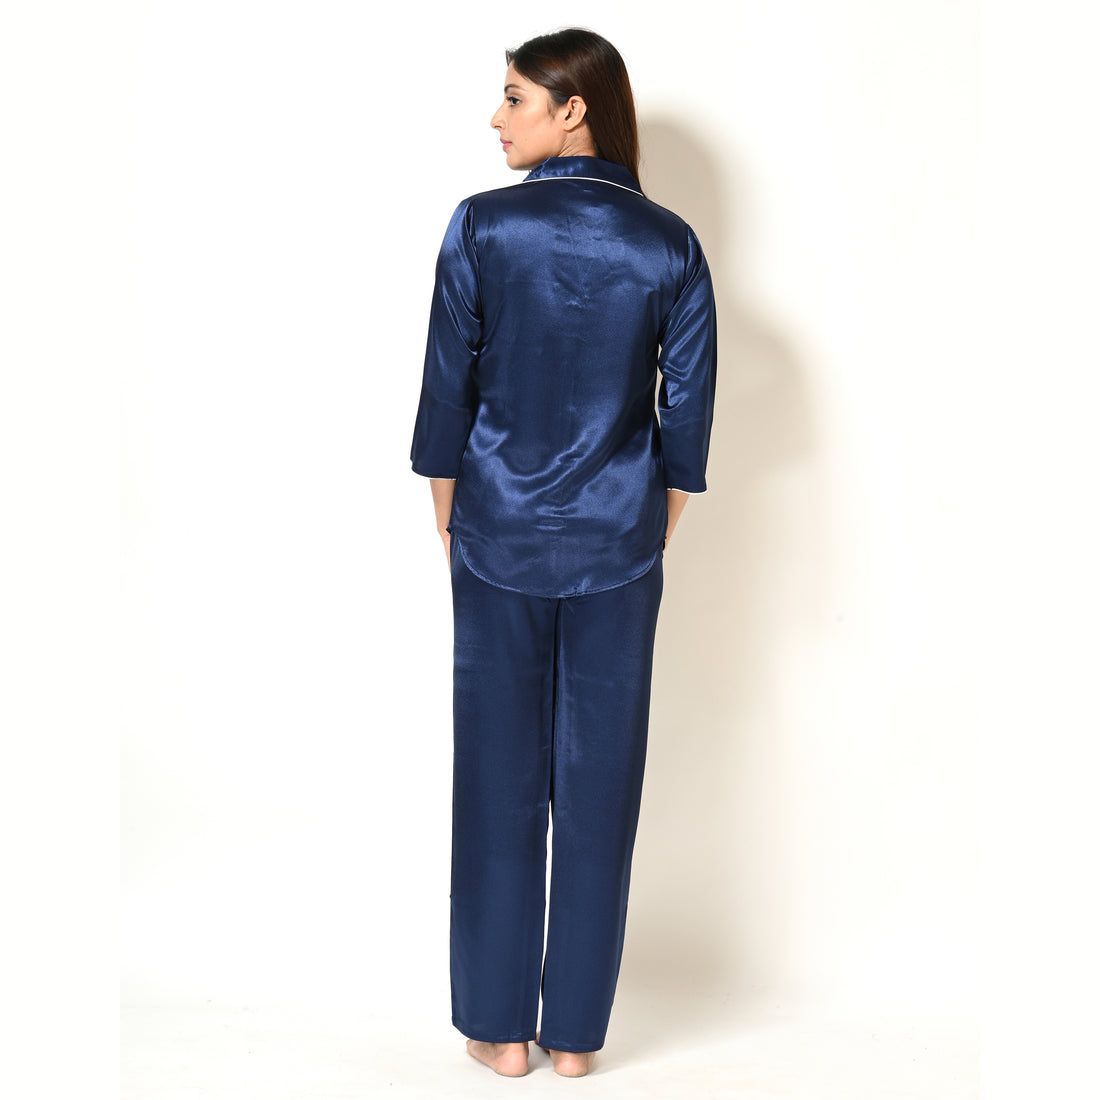 Classic Navy Blue Satin Women's Nightwear Set